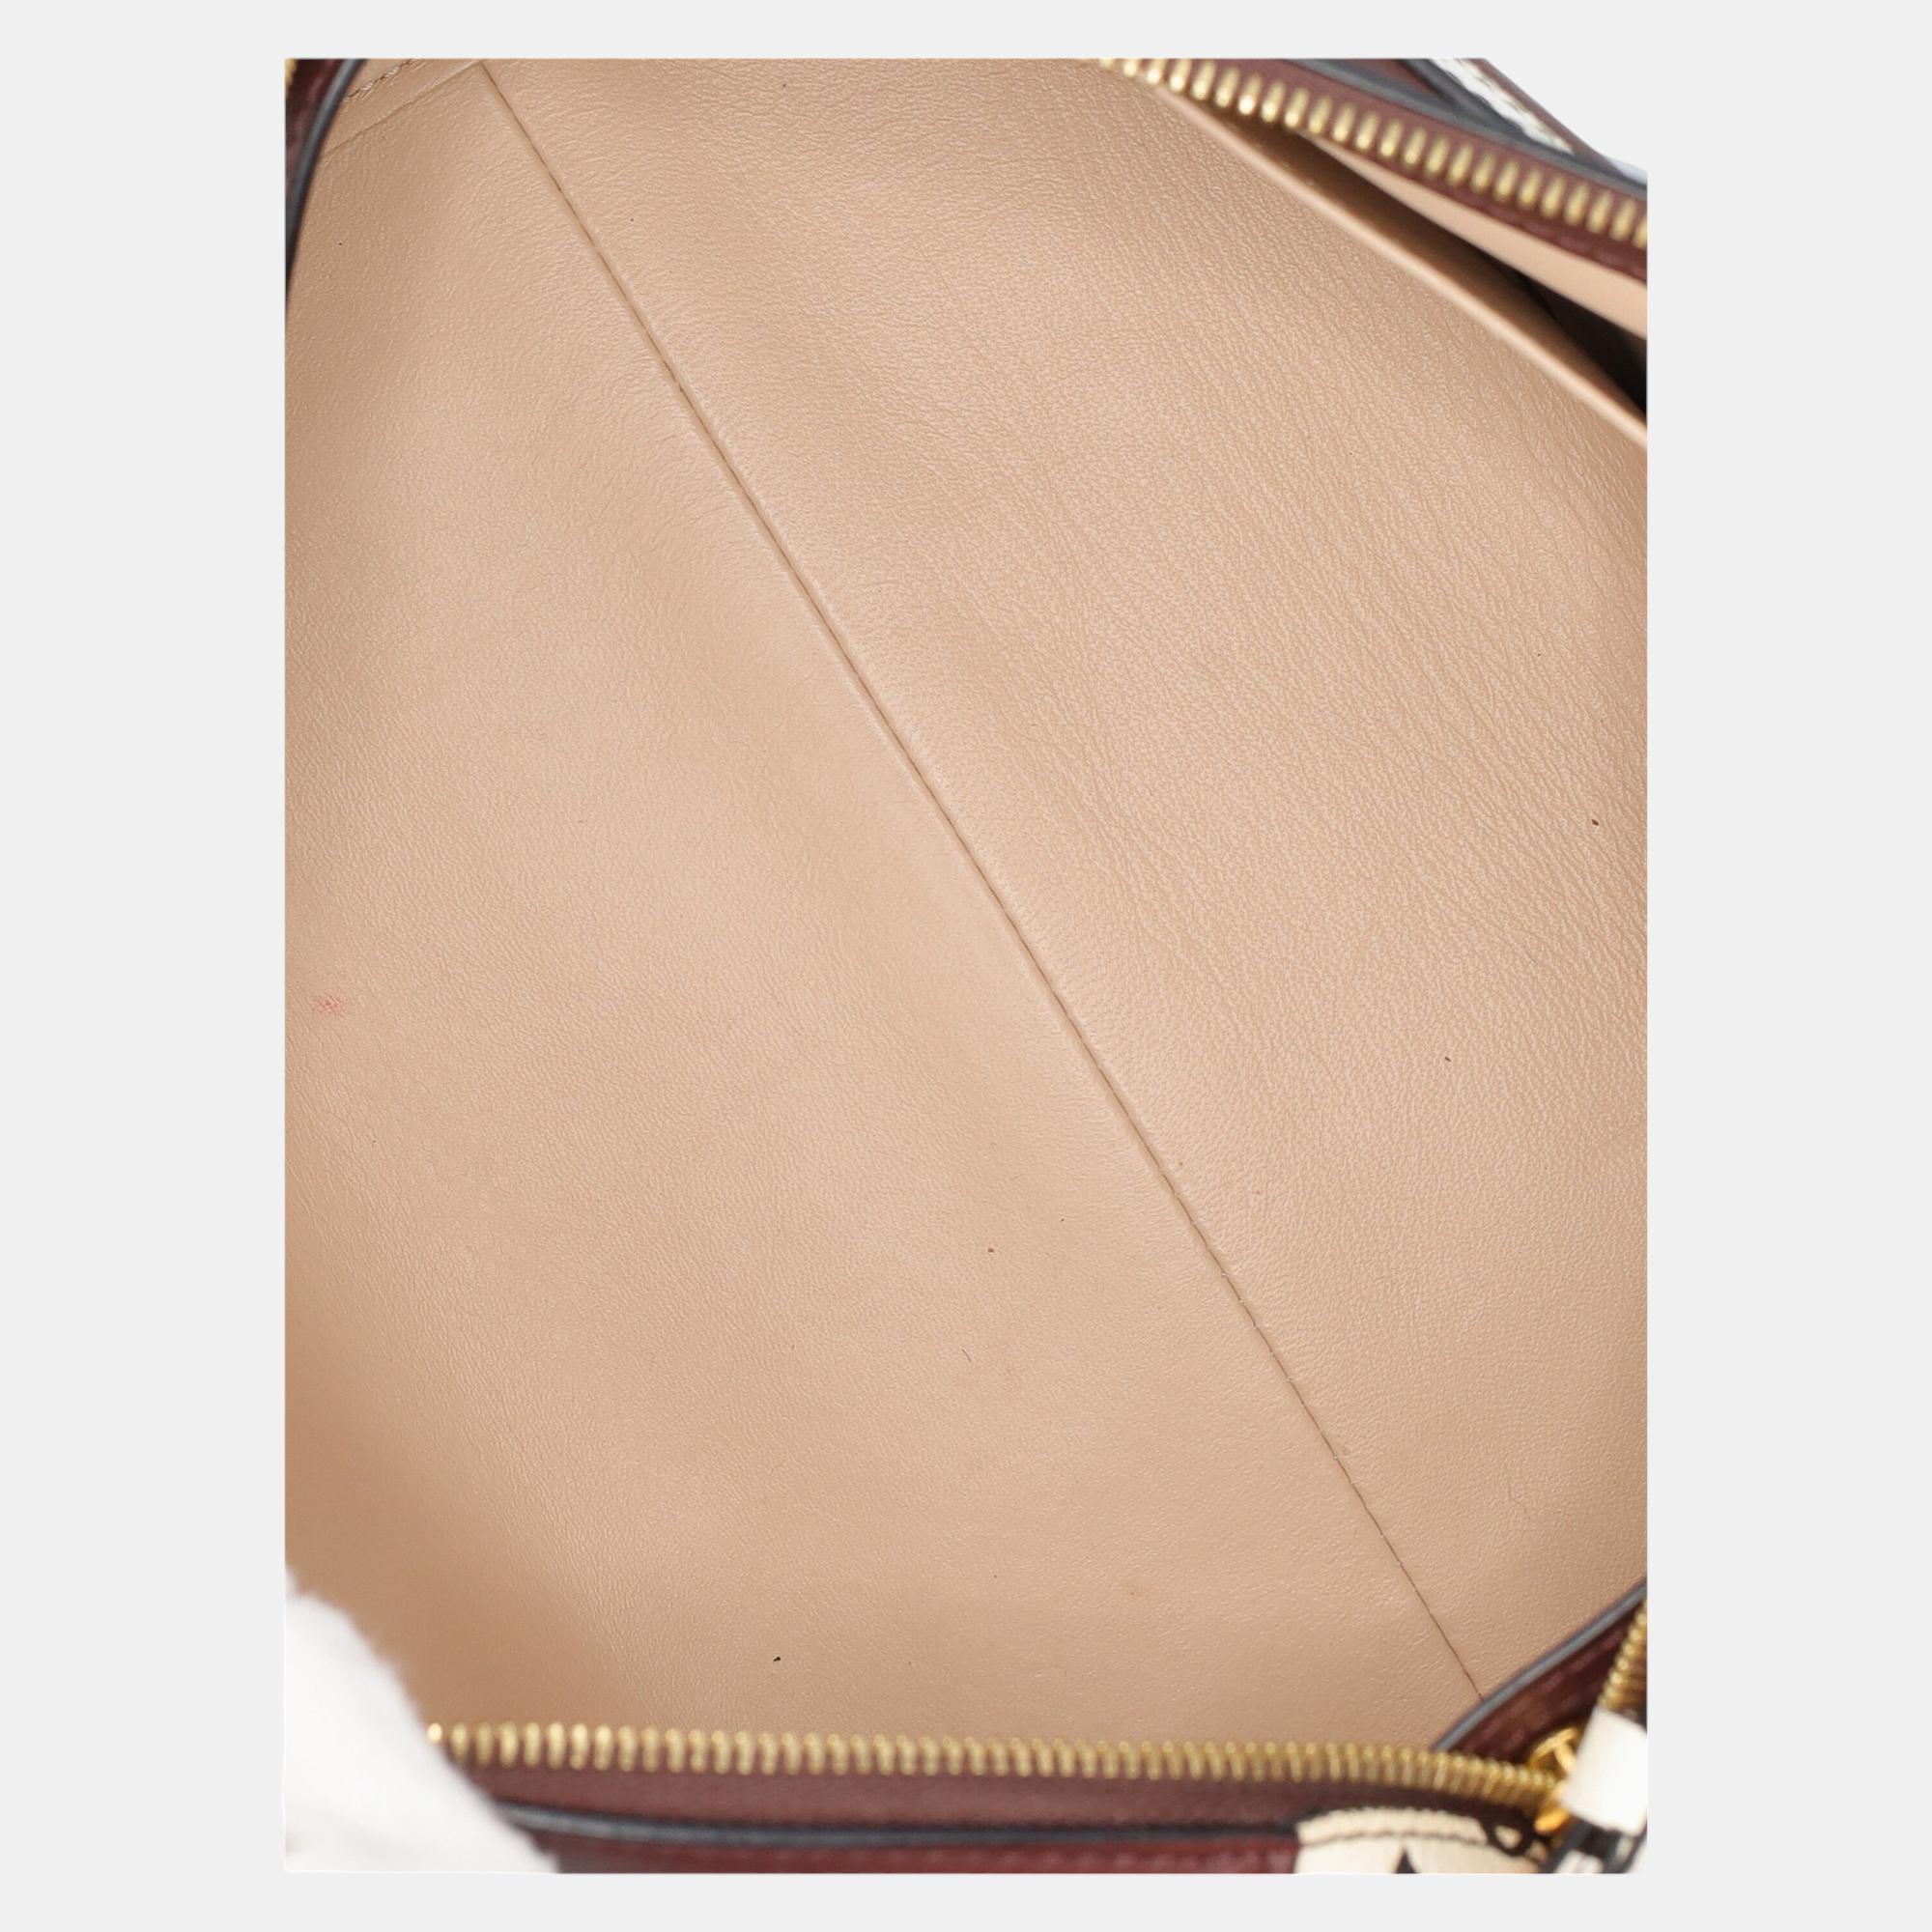 Louis Vuitton  Women's Leather Handbag - Black - One Size